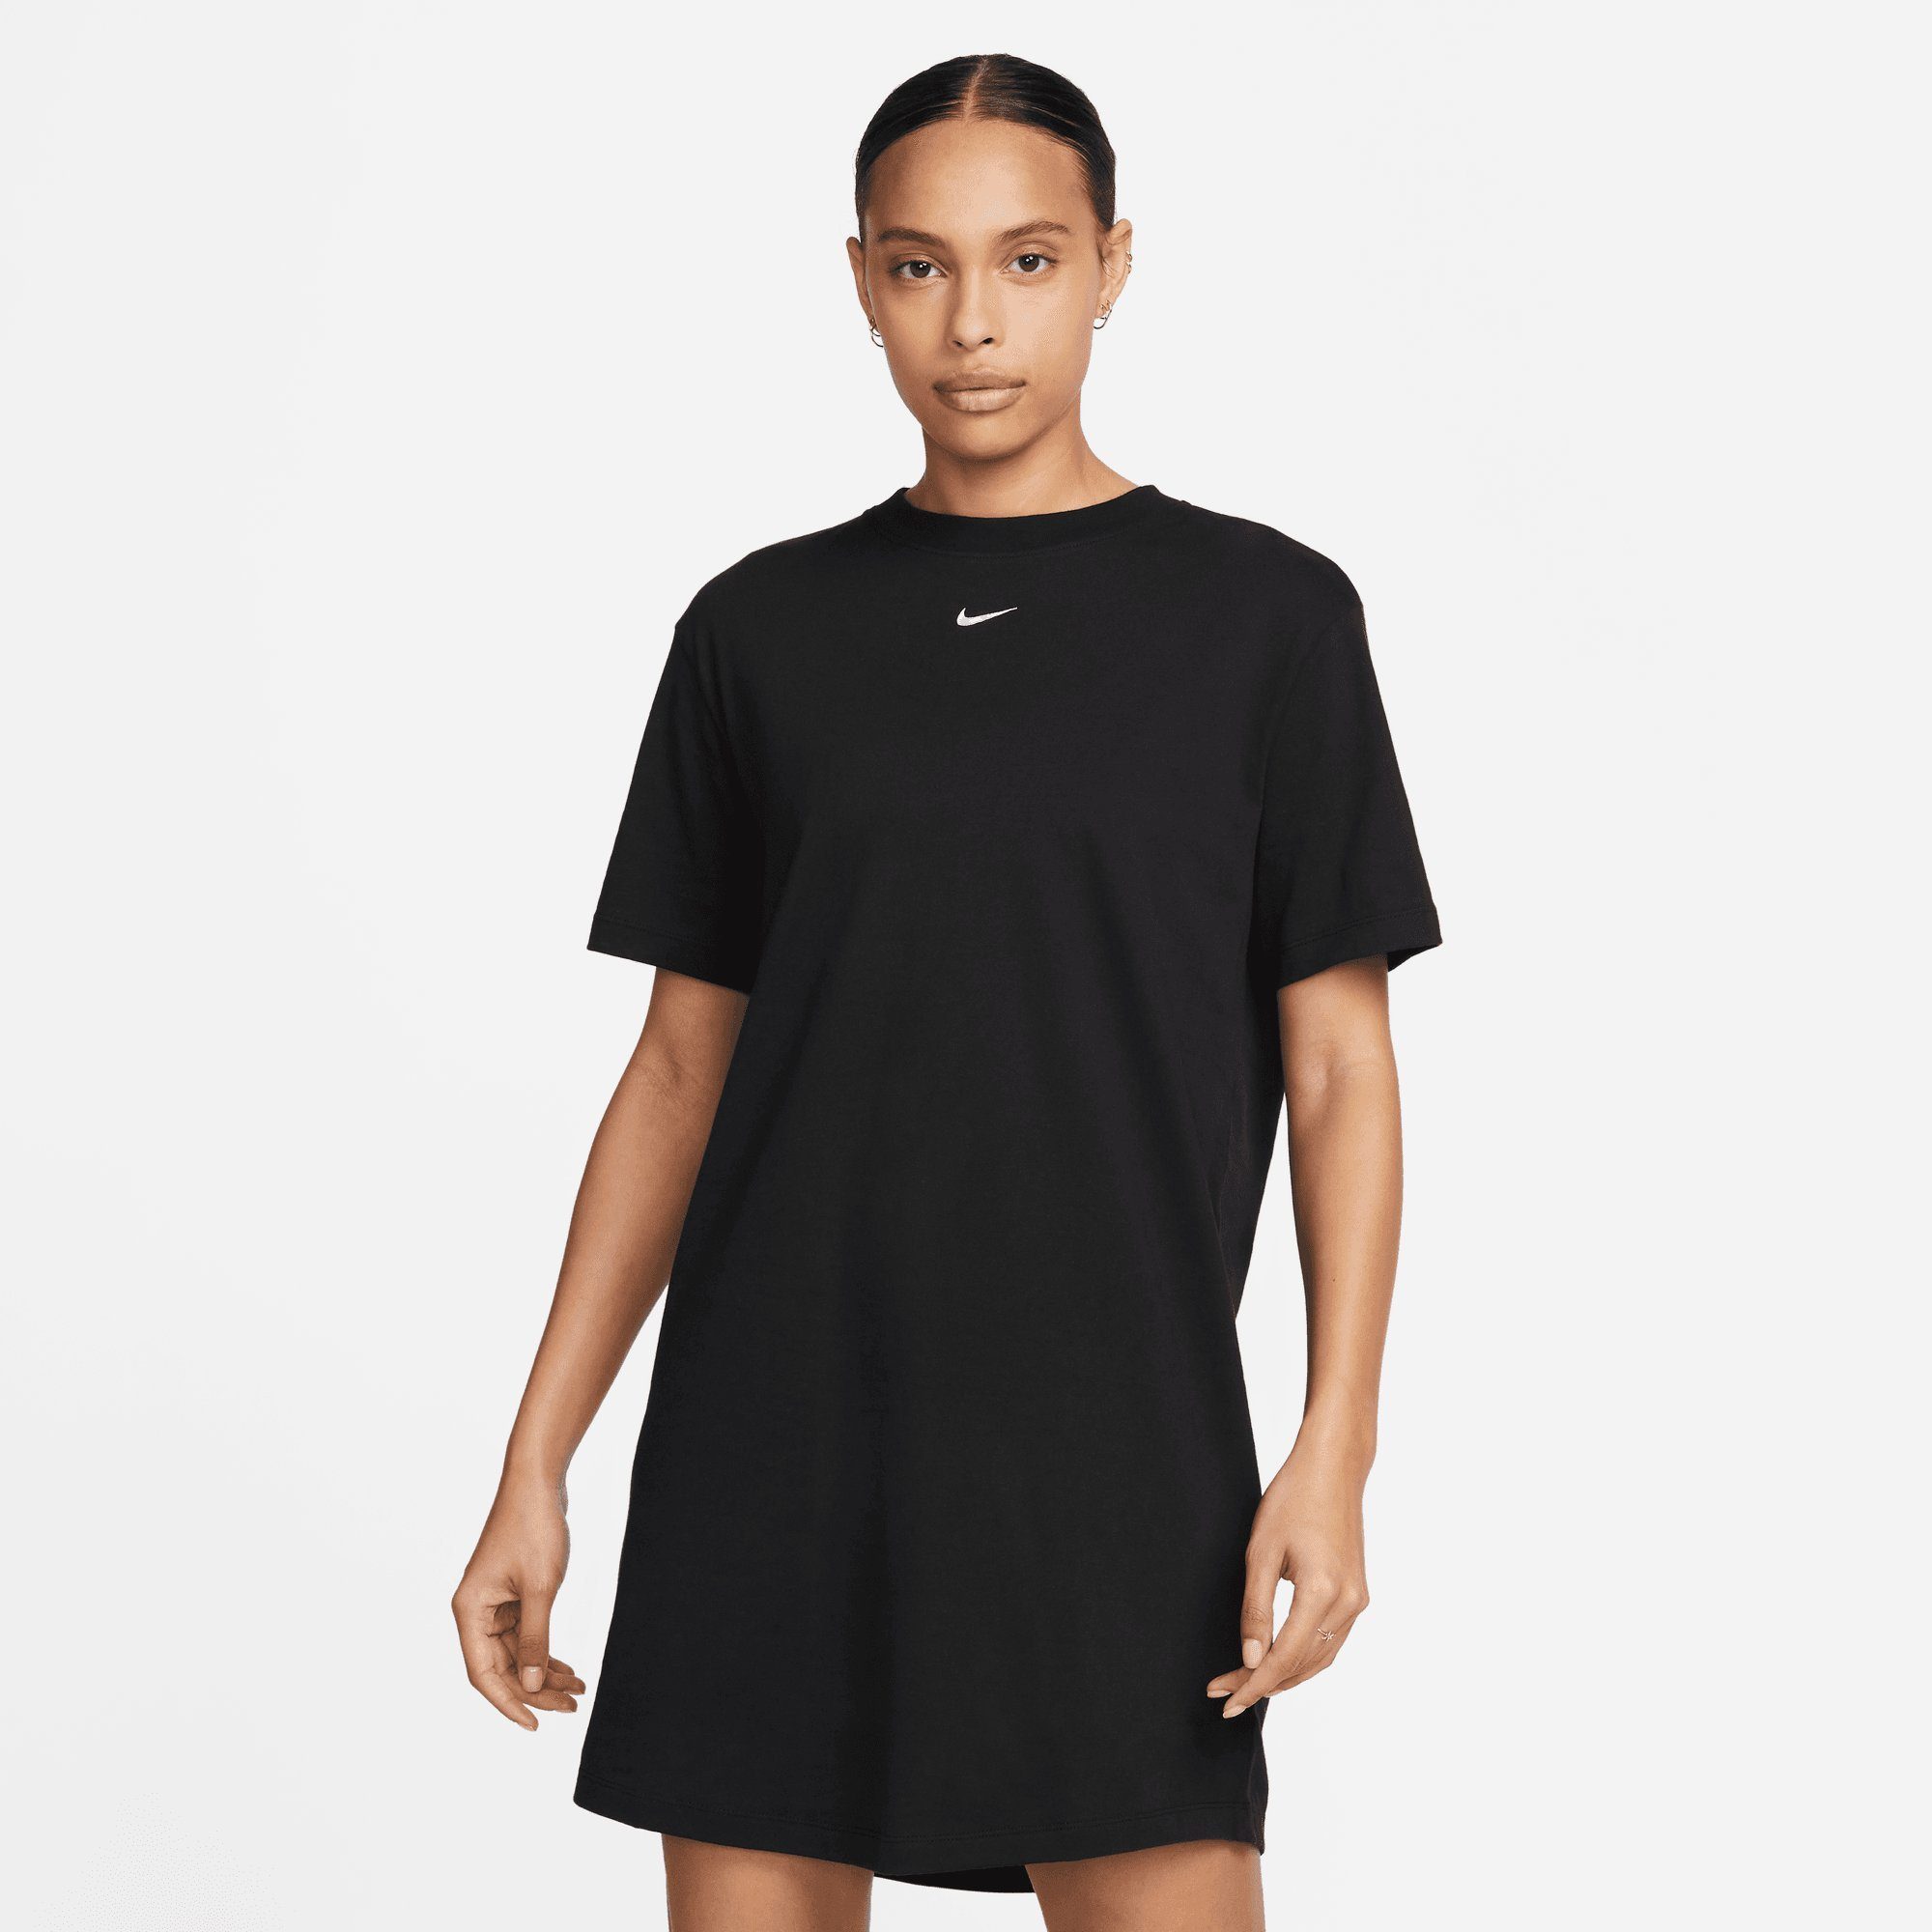 DRESS Sommerkleid Sportswear WOMEN'S BLACK/WHITE SHORT-SLEEVE Nike ESSENTIAL